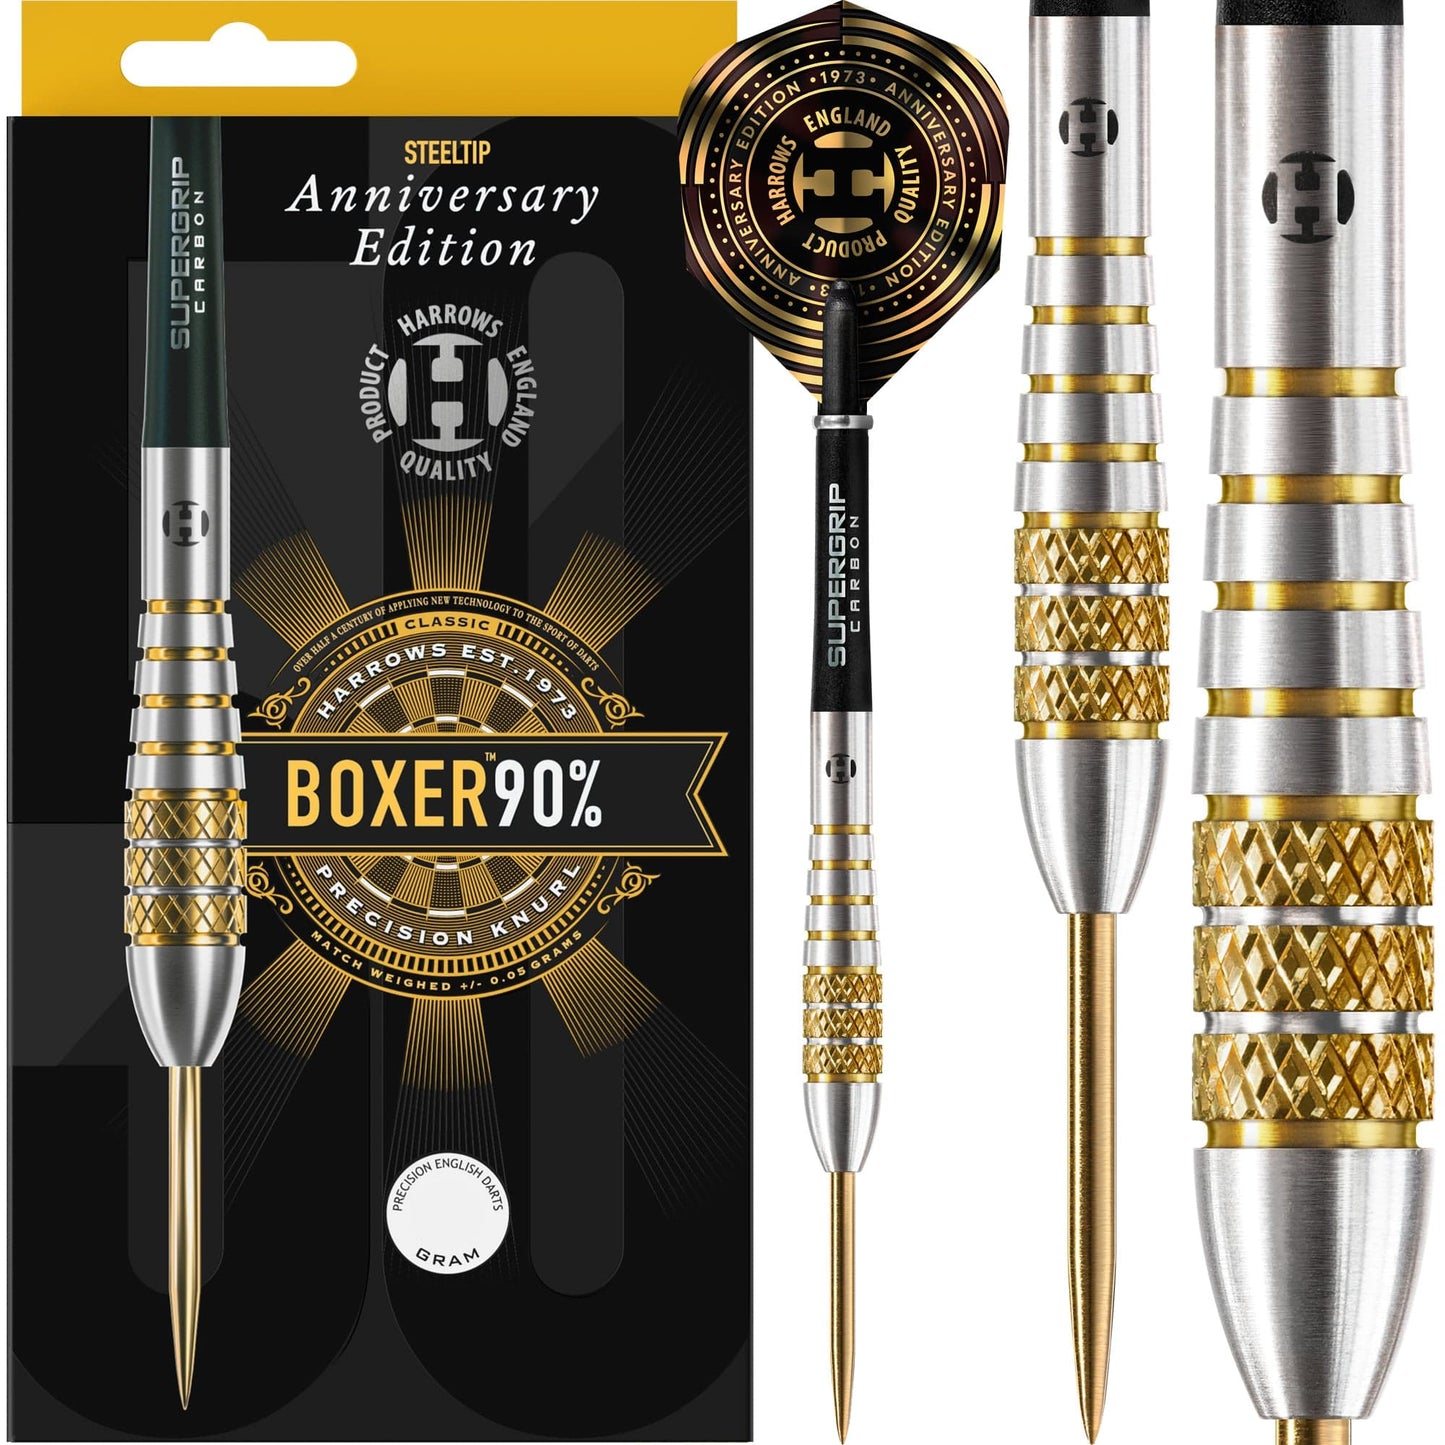 Harrows Boxer Darts - Steel Tip - 90% - Anniversary Edition - Bomb